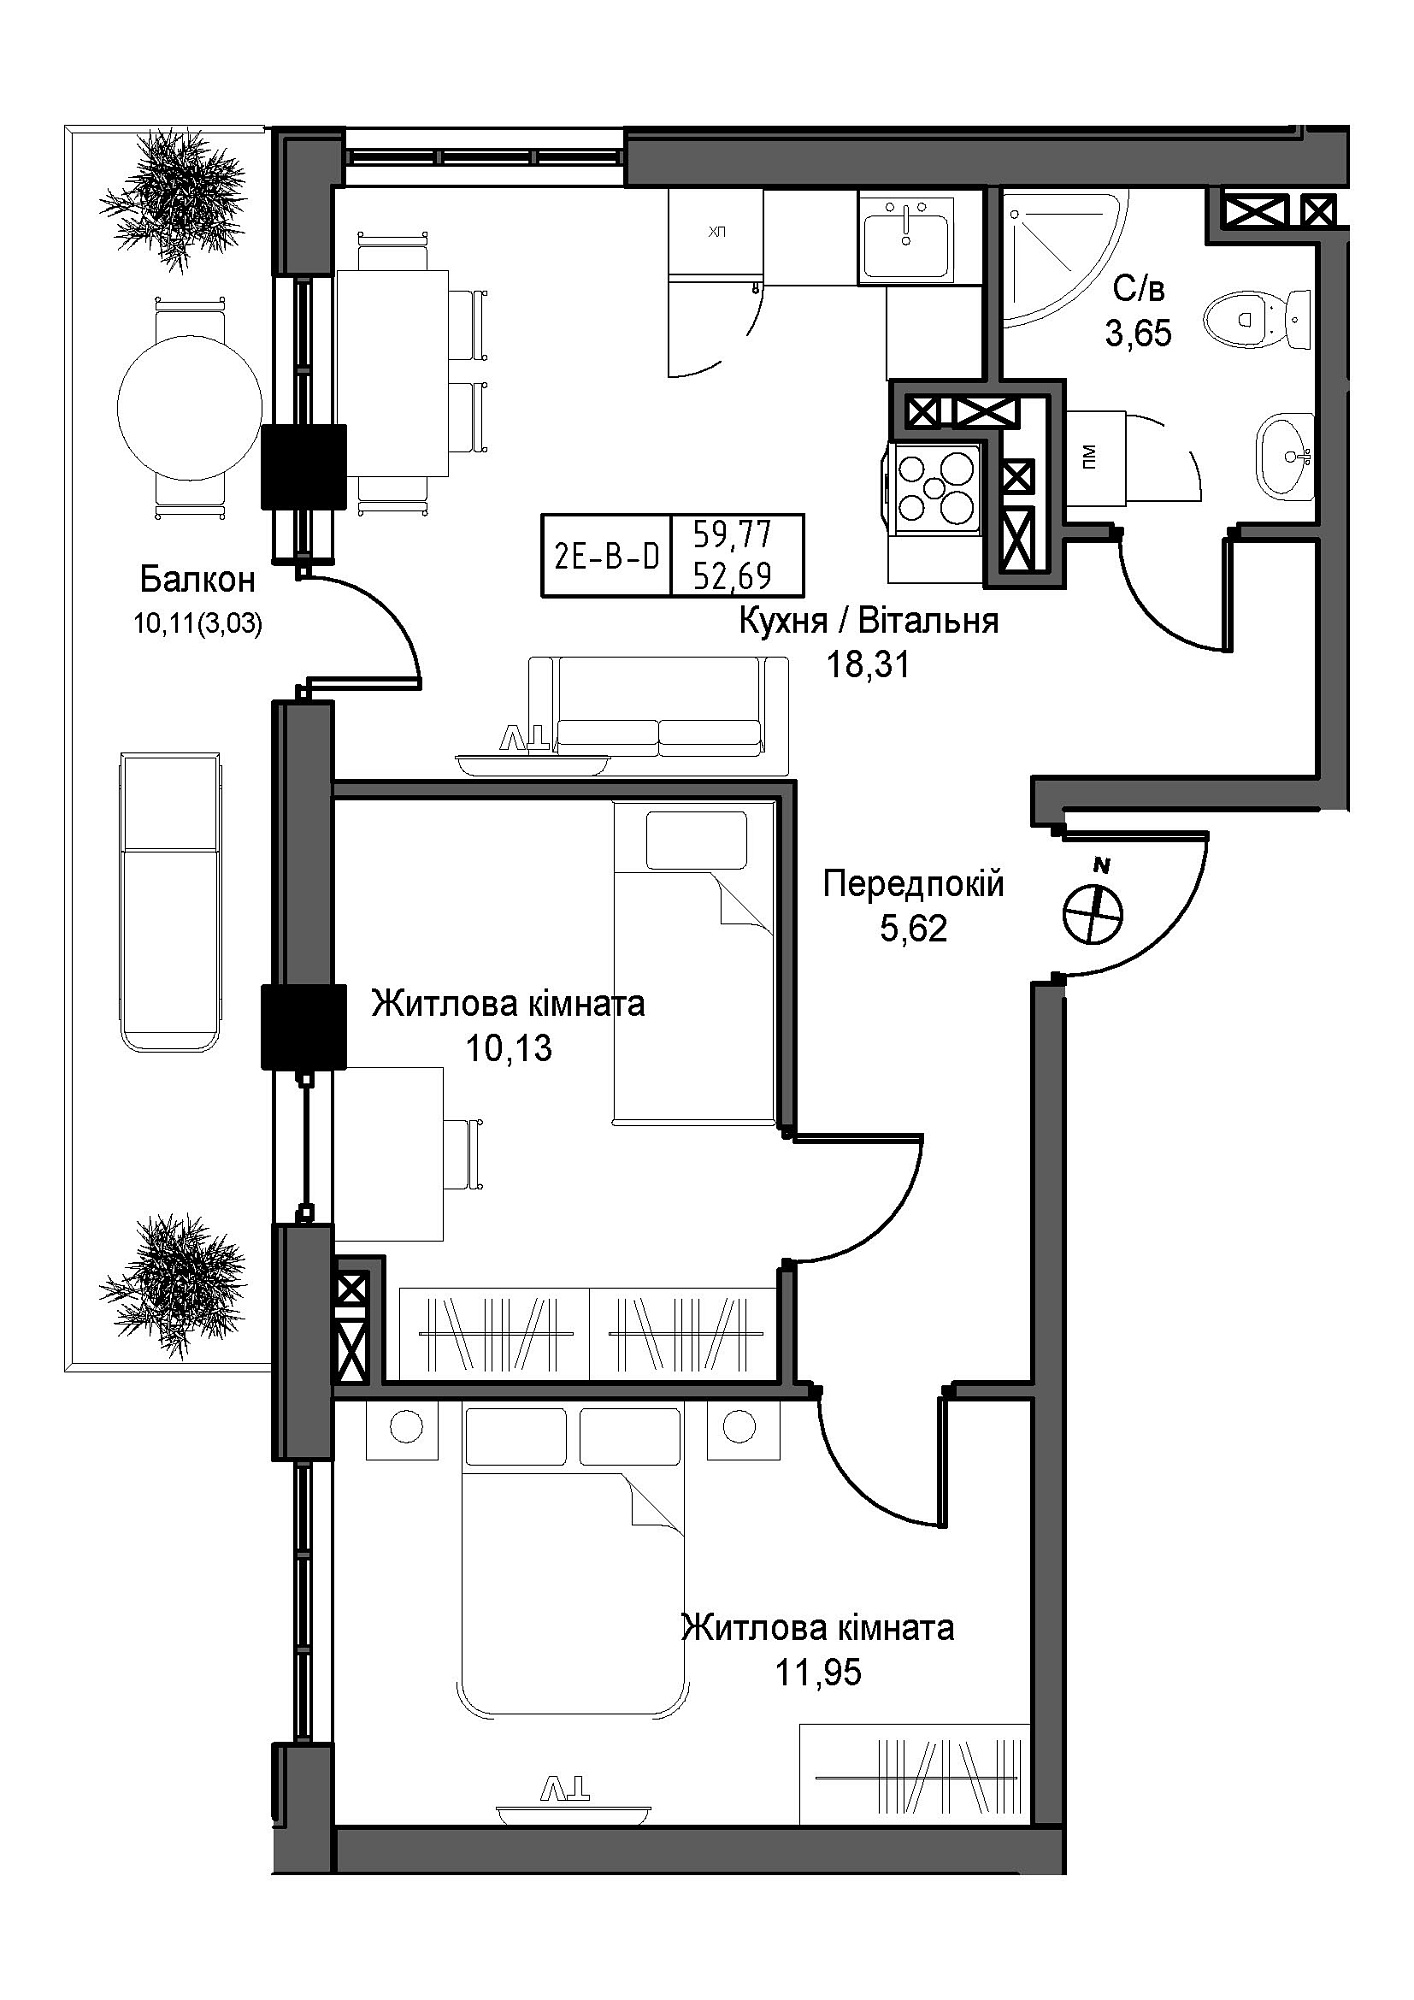 Планування 2-к квартира площею 52.69м2, UM-007-11/0001.